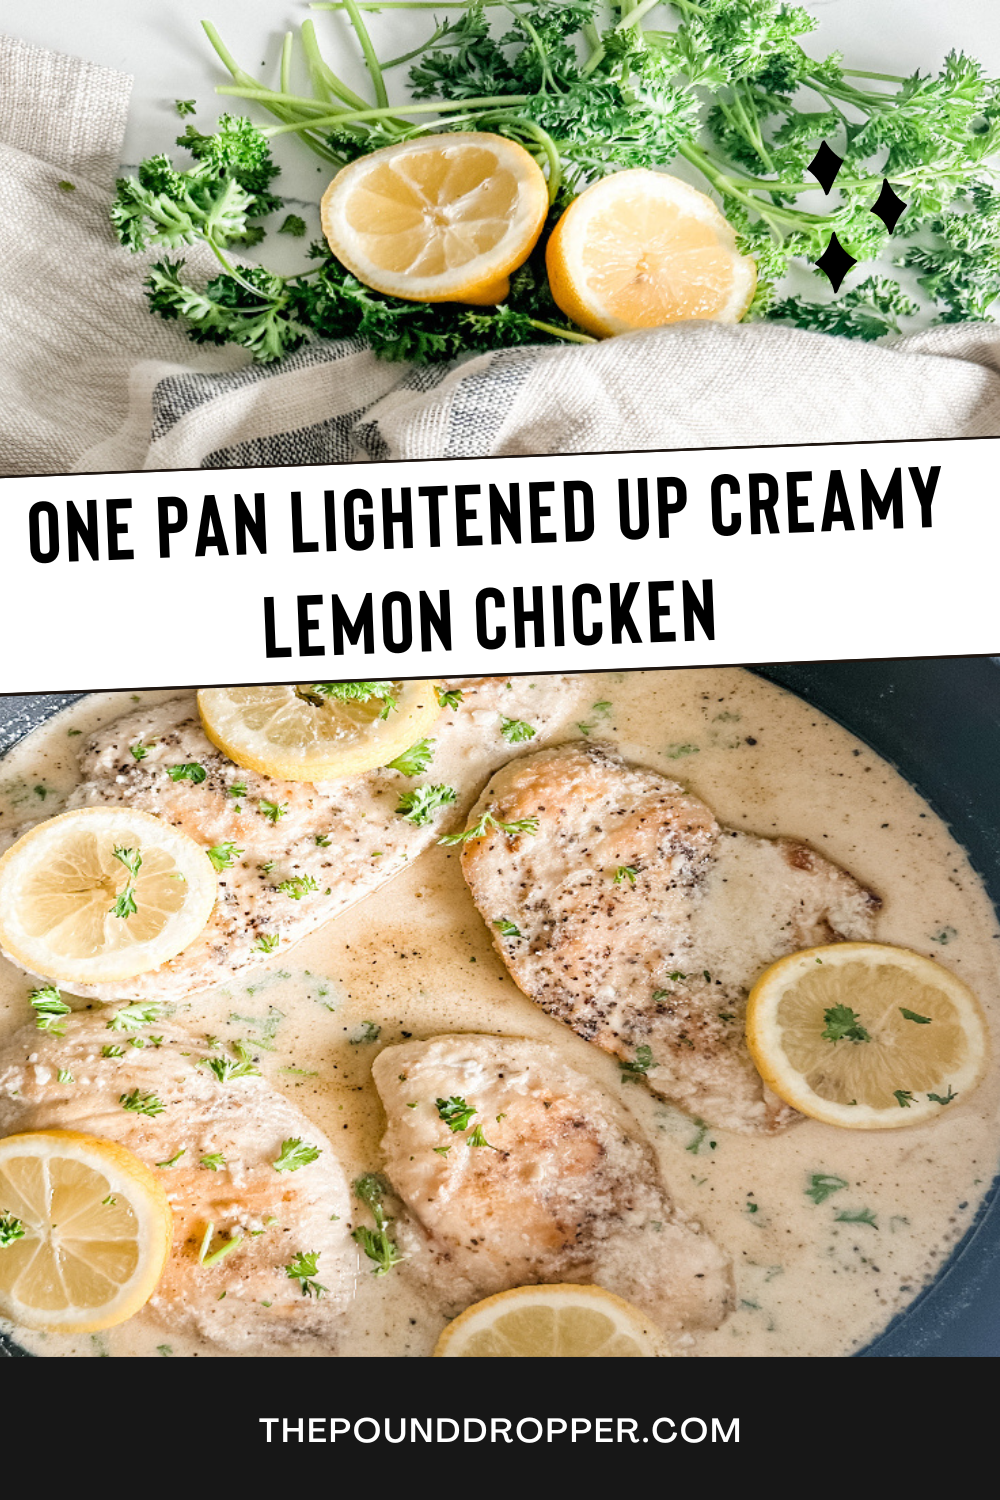 One Pan Lightened Up Creamy Lemon Chicken via @pounddropper